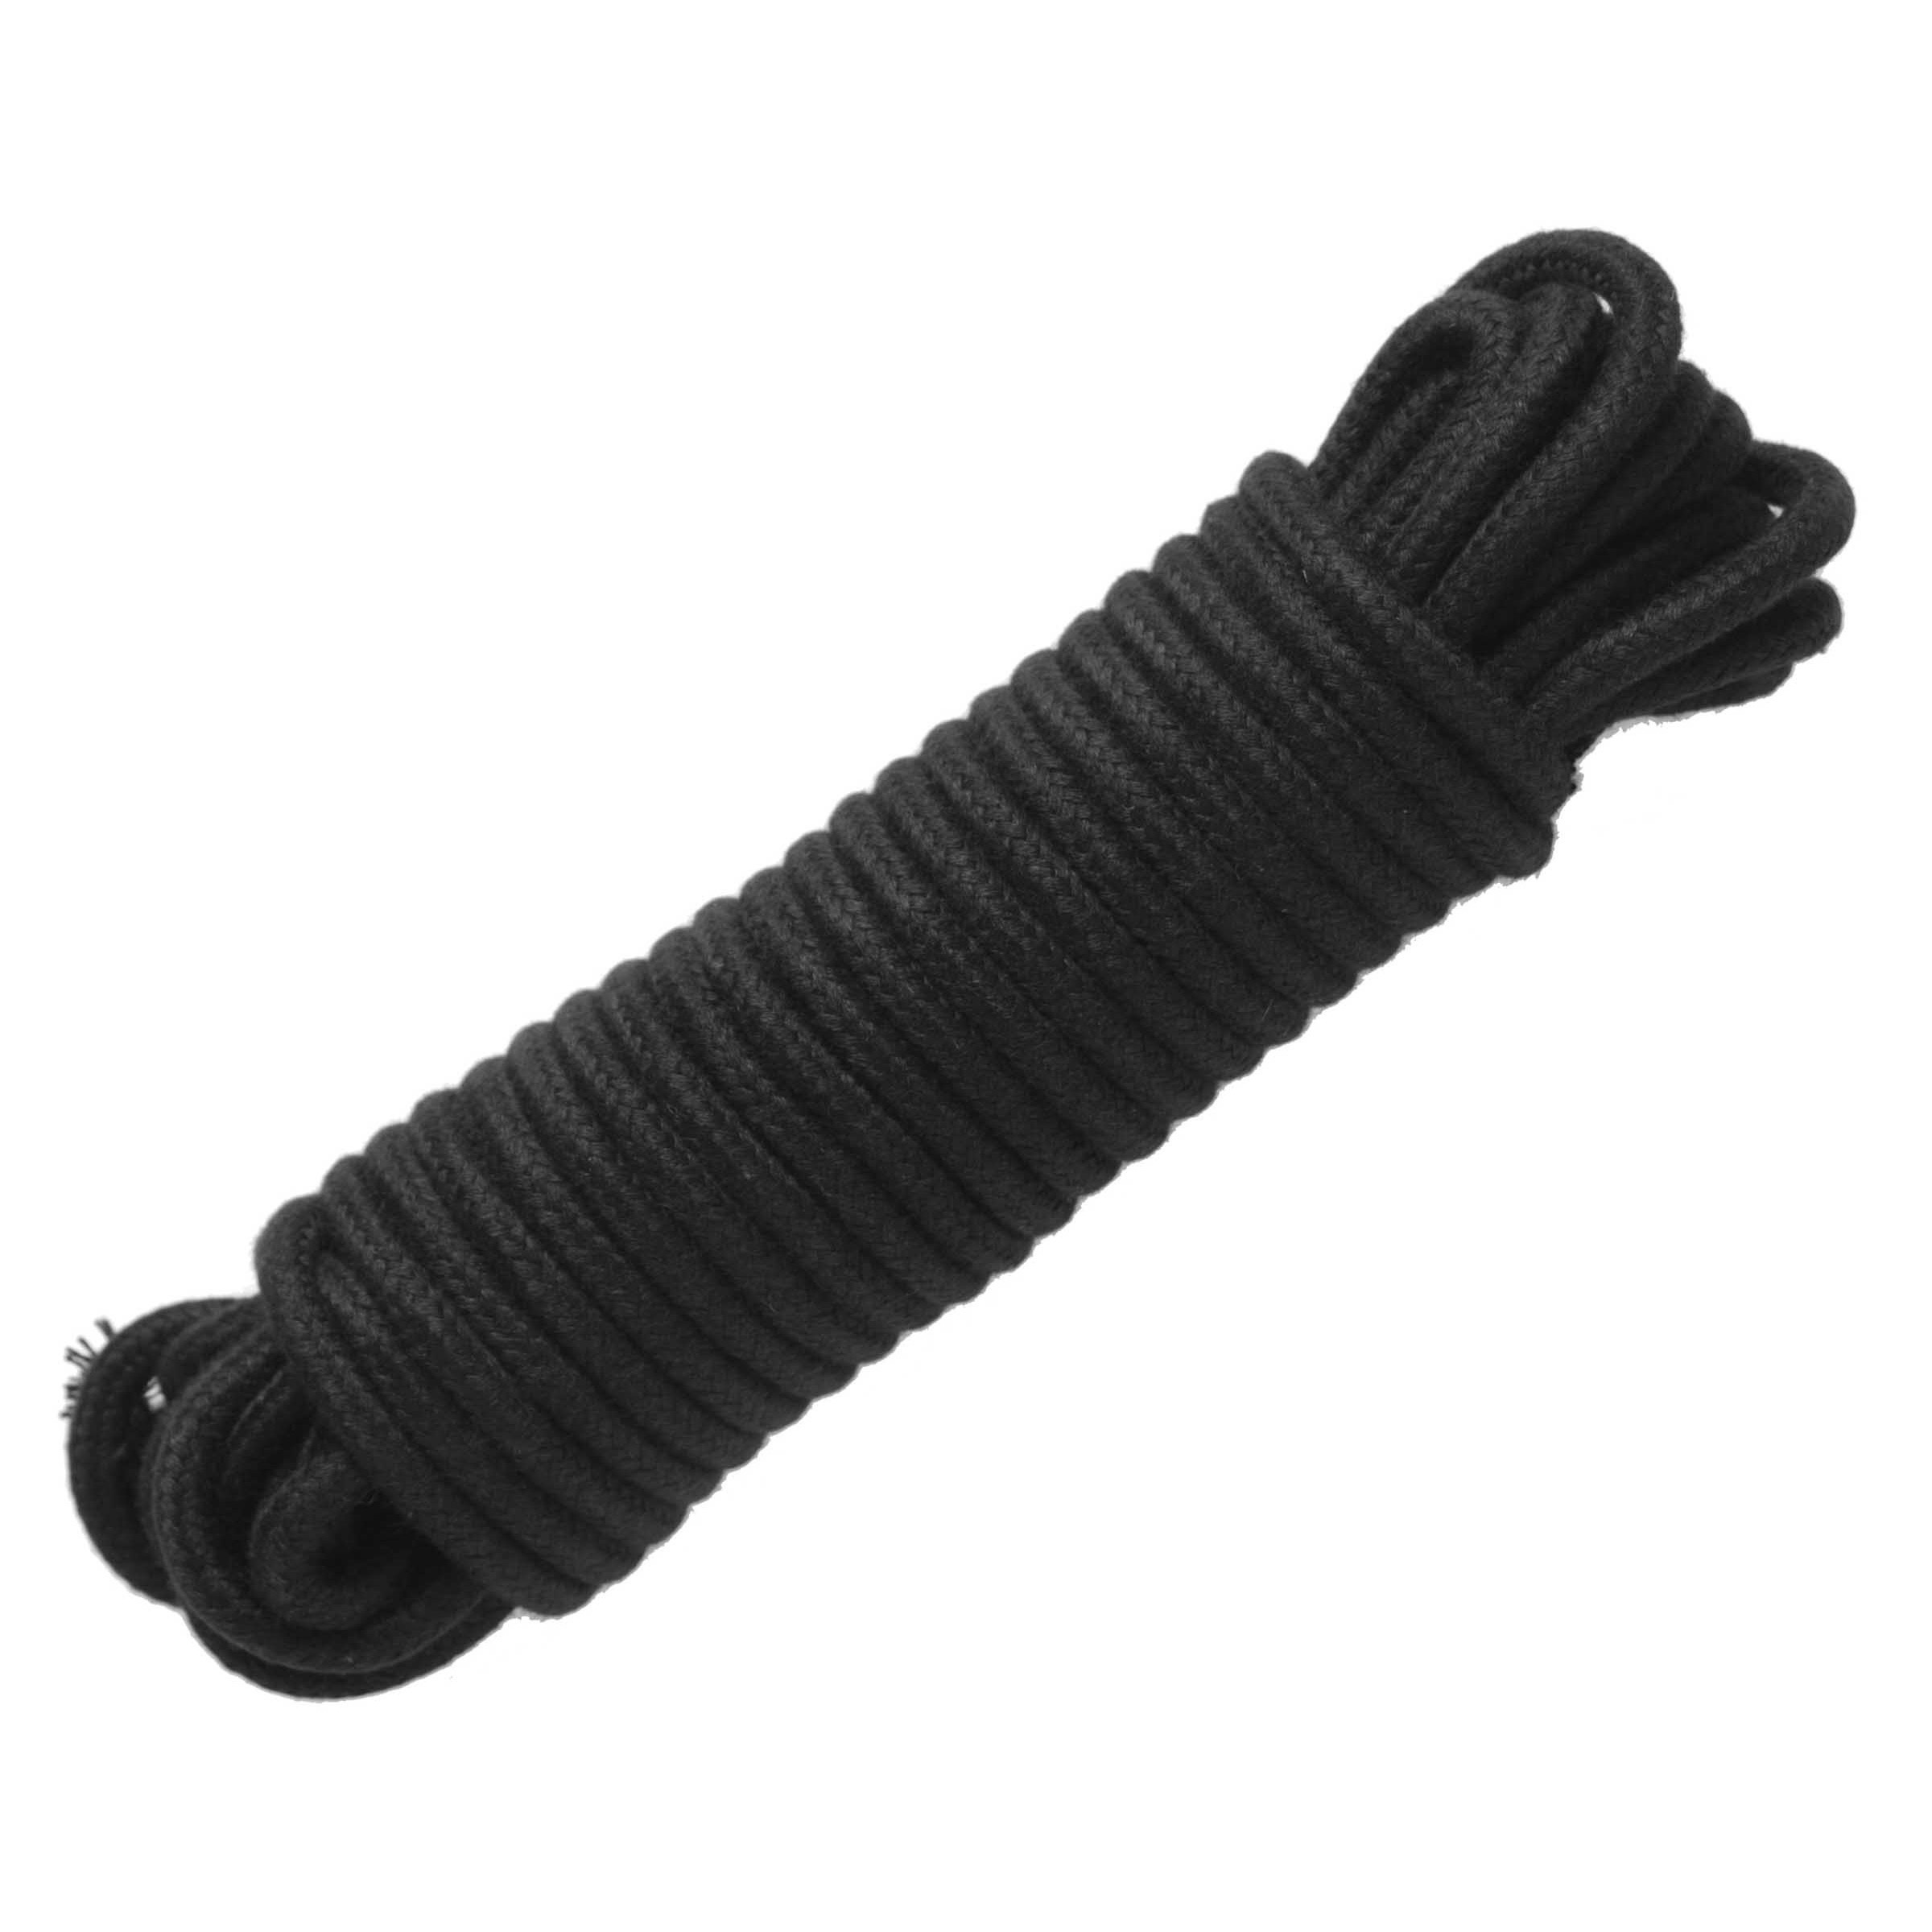 32 Foot Cotton Bondage Rope – Black